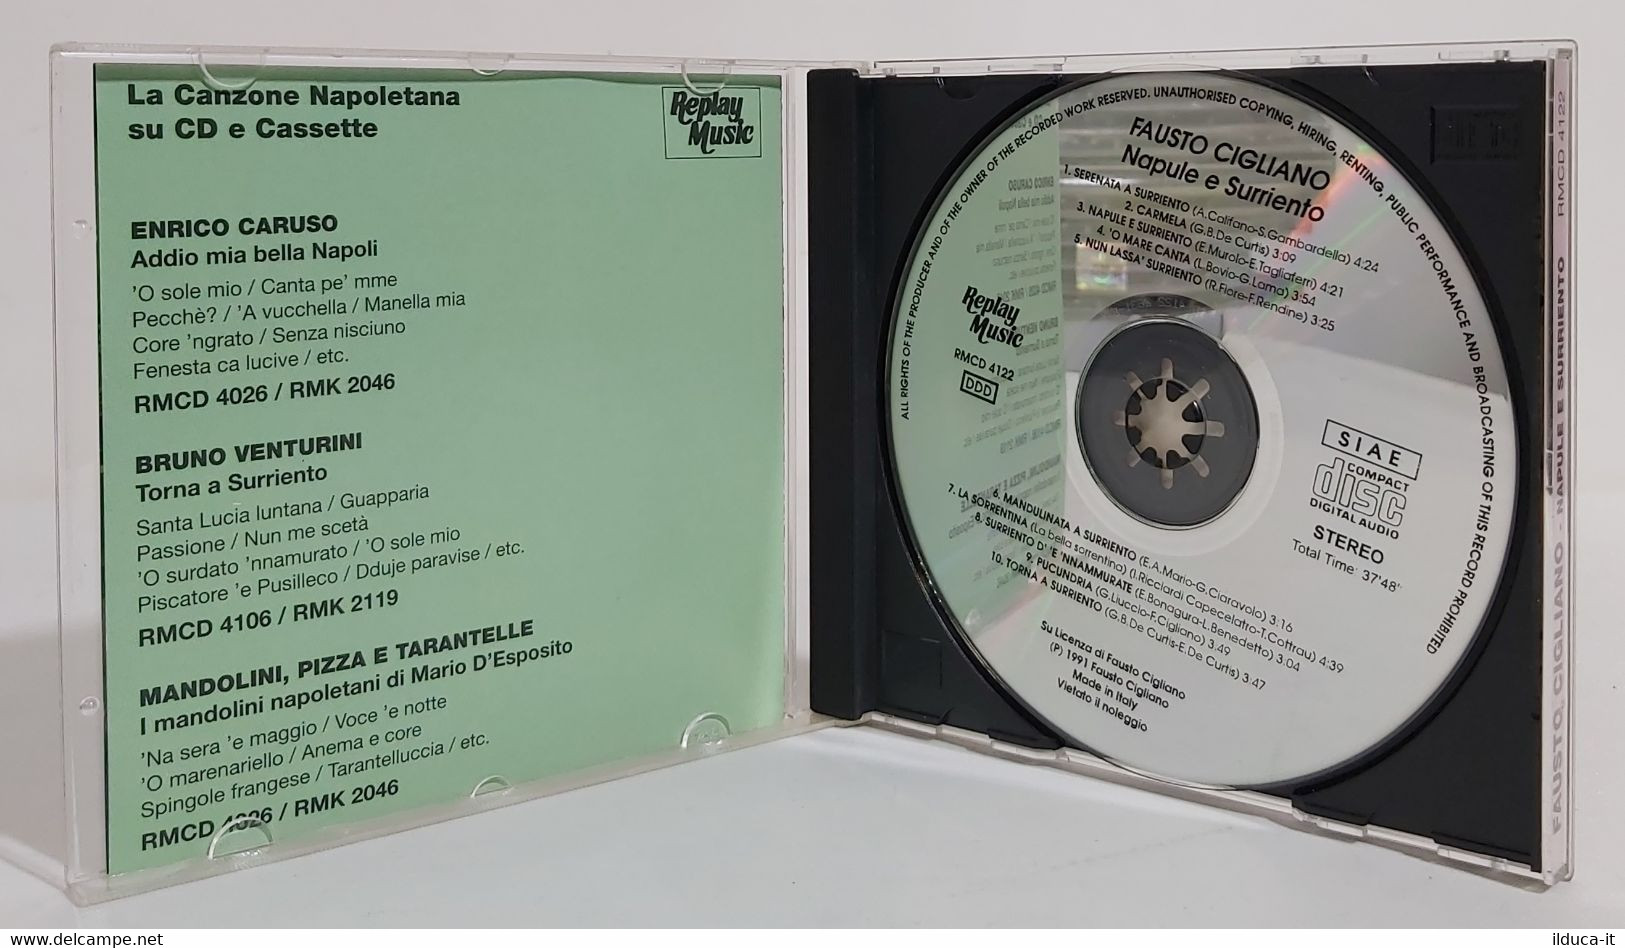 I102294 CD - Fausto Cigliano - Napule E Surriento - Replay Music 1991 - Other - Italian Music